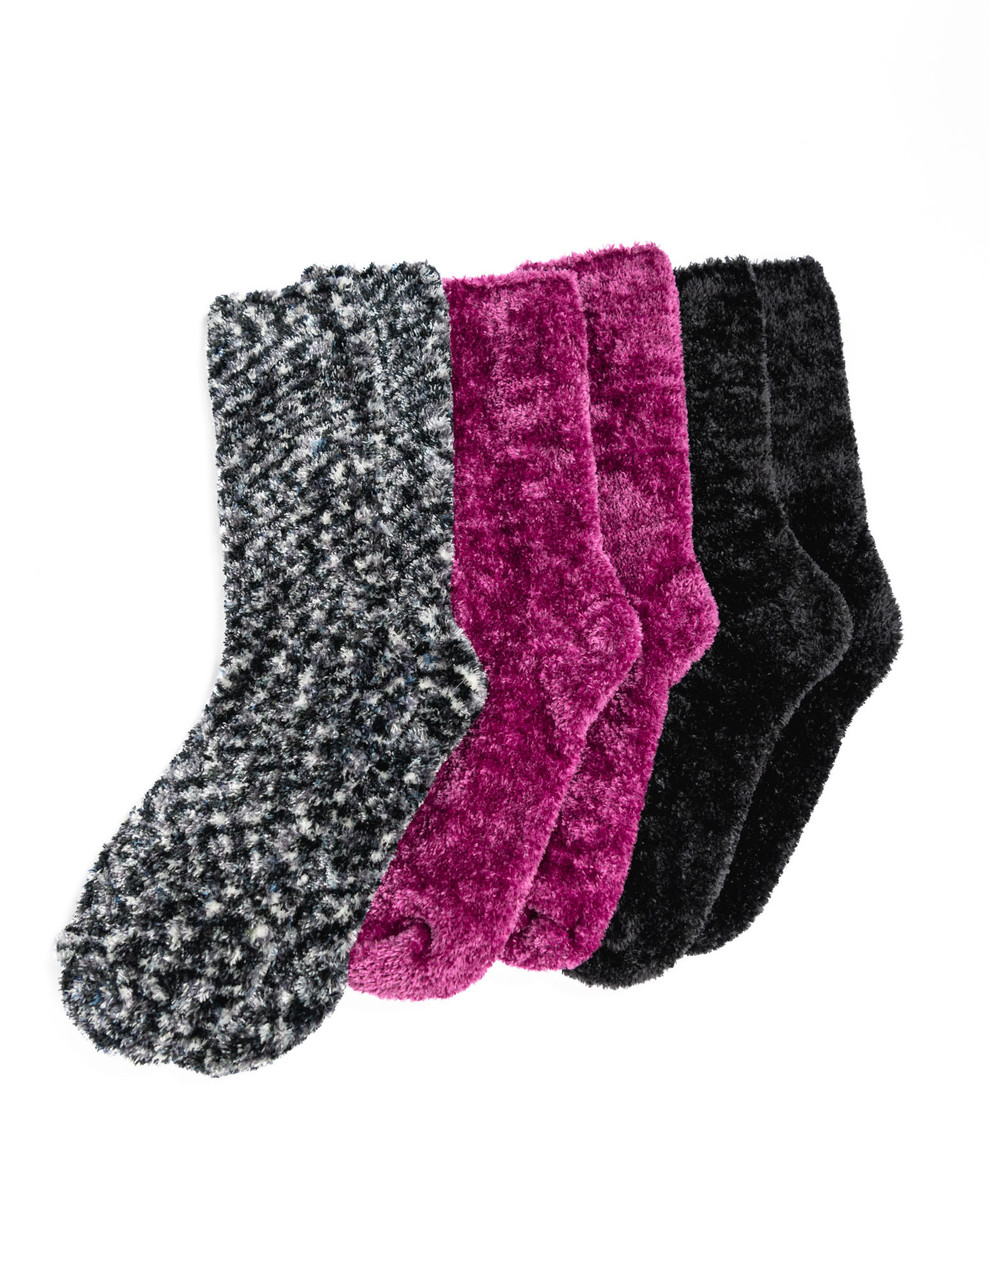 NO NONSENSE - Silky Trouser Socks Black Sizes 4-10 - 3 Pairs